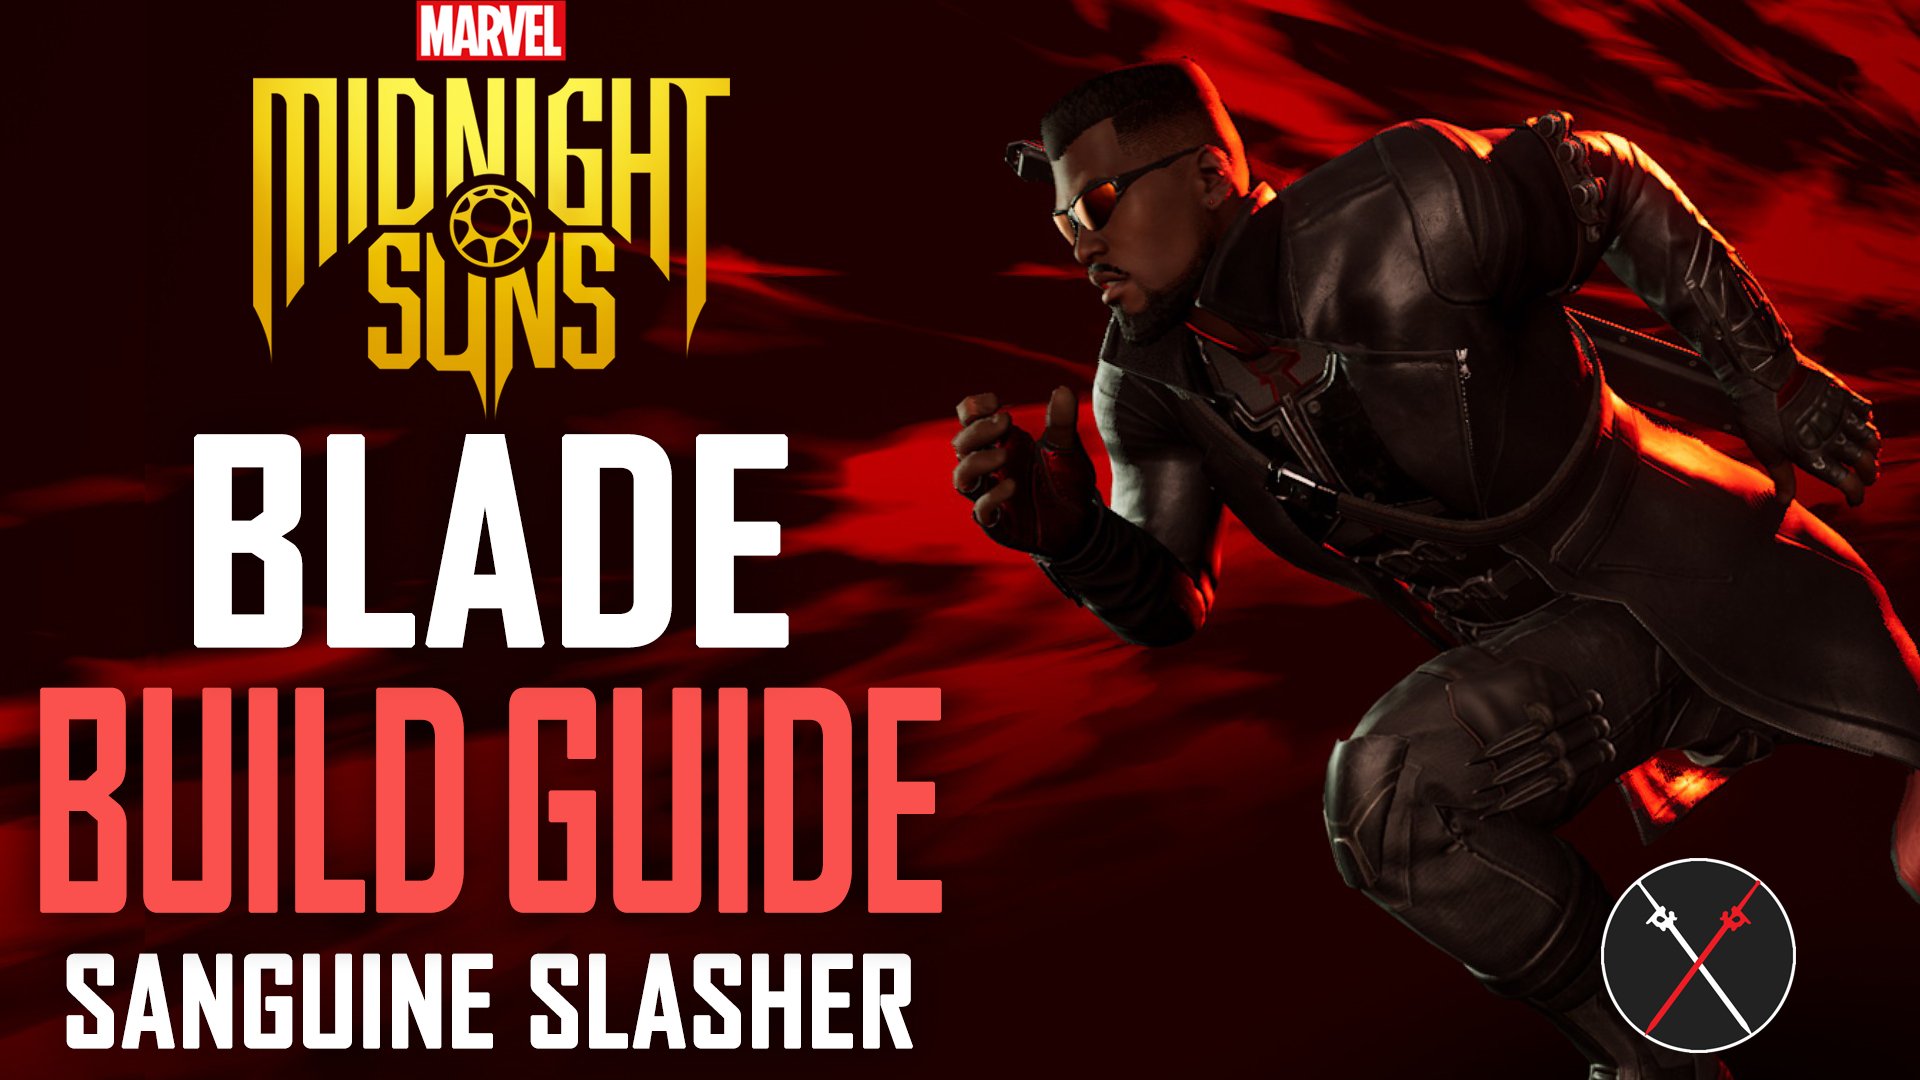 Marvel Midnight Suns Guides - Beginner's Guide